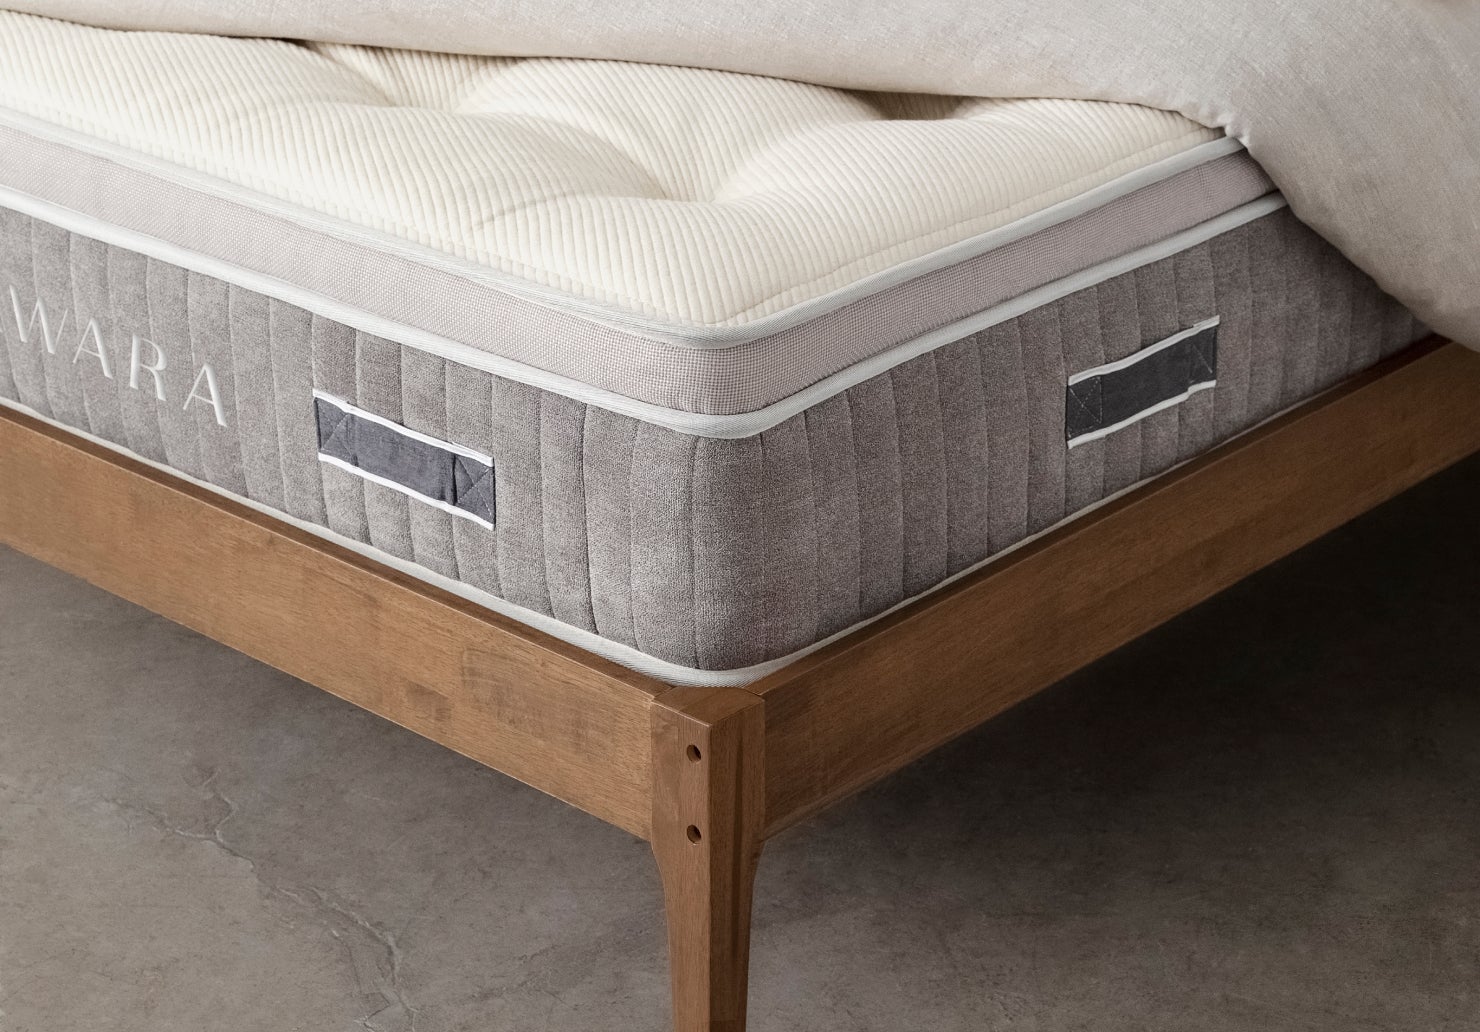 awara brand latex mattress